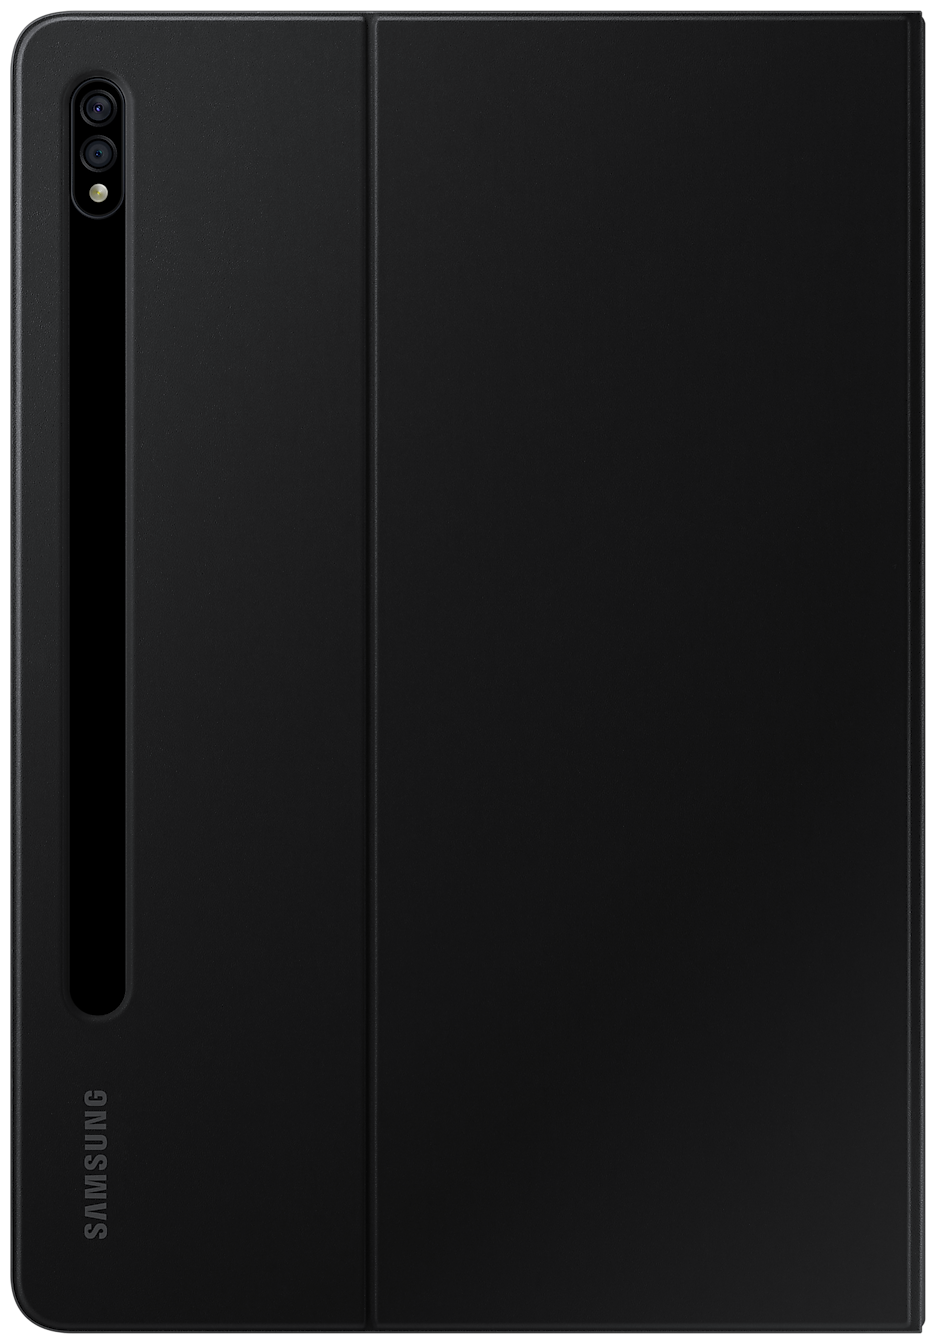 Чехол Samsung для Samsung Galaxy Tab S7 Book Cover полиуретан черный EF-BT630PBEGRU